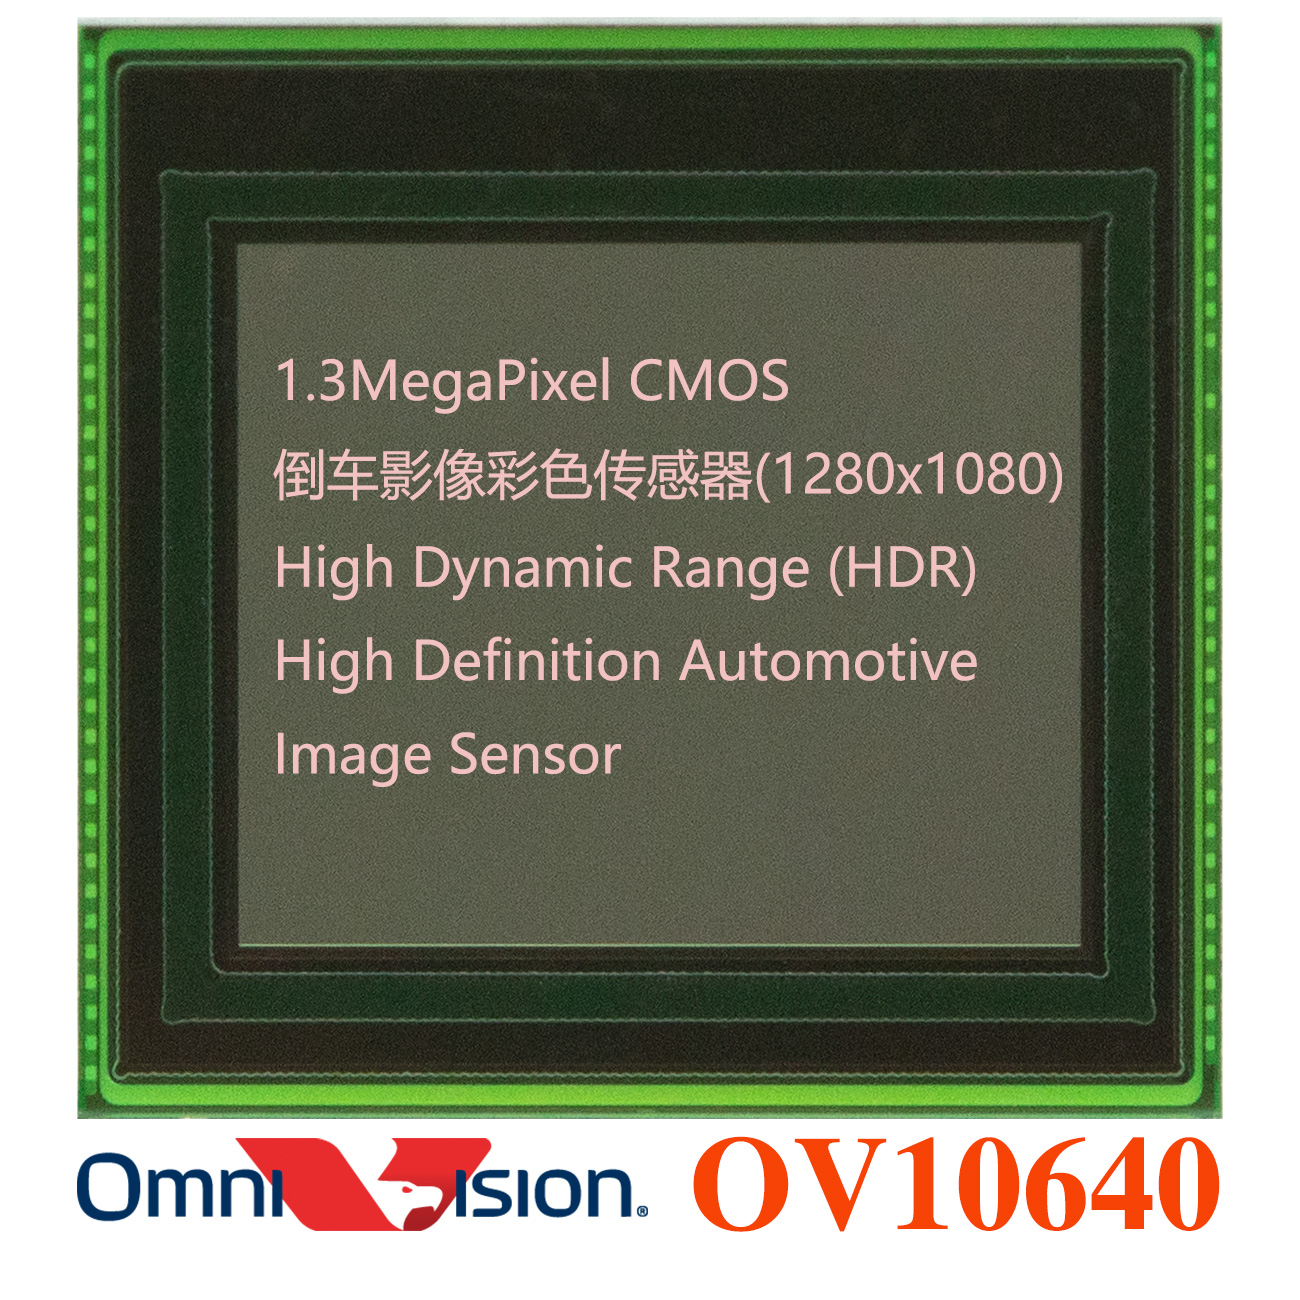 OV10640-N79Y-PF， OmniVision， Color CMOS sensor ，1.3 Megapixel (1280x1080) ，High Dynamic Range (HDR)， High Definition Automotive  Image Sensor， 130万像素传感器，高动态范围汽车CMOS，车规彩色图像传感器，车规130万传感器，汽车芯片，车载影像传感器，倒车影像传感器，车规百万像素图像传感器，360°度全景倒车图像传感器，360° panoramic reverse image sensor